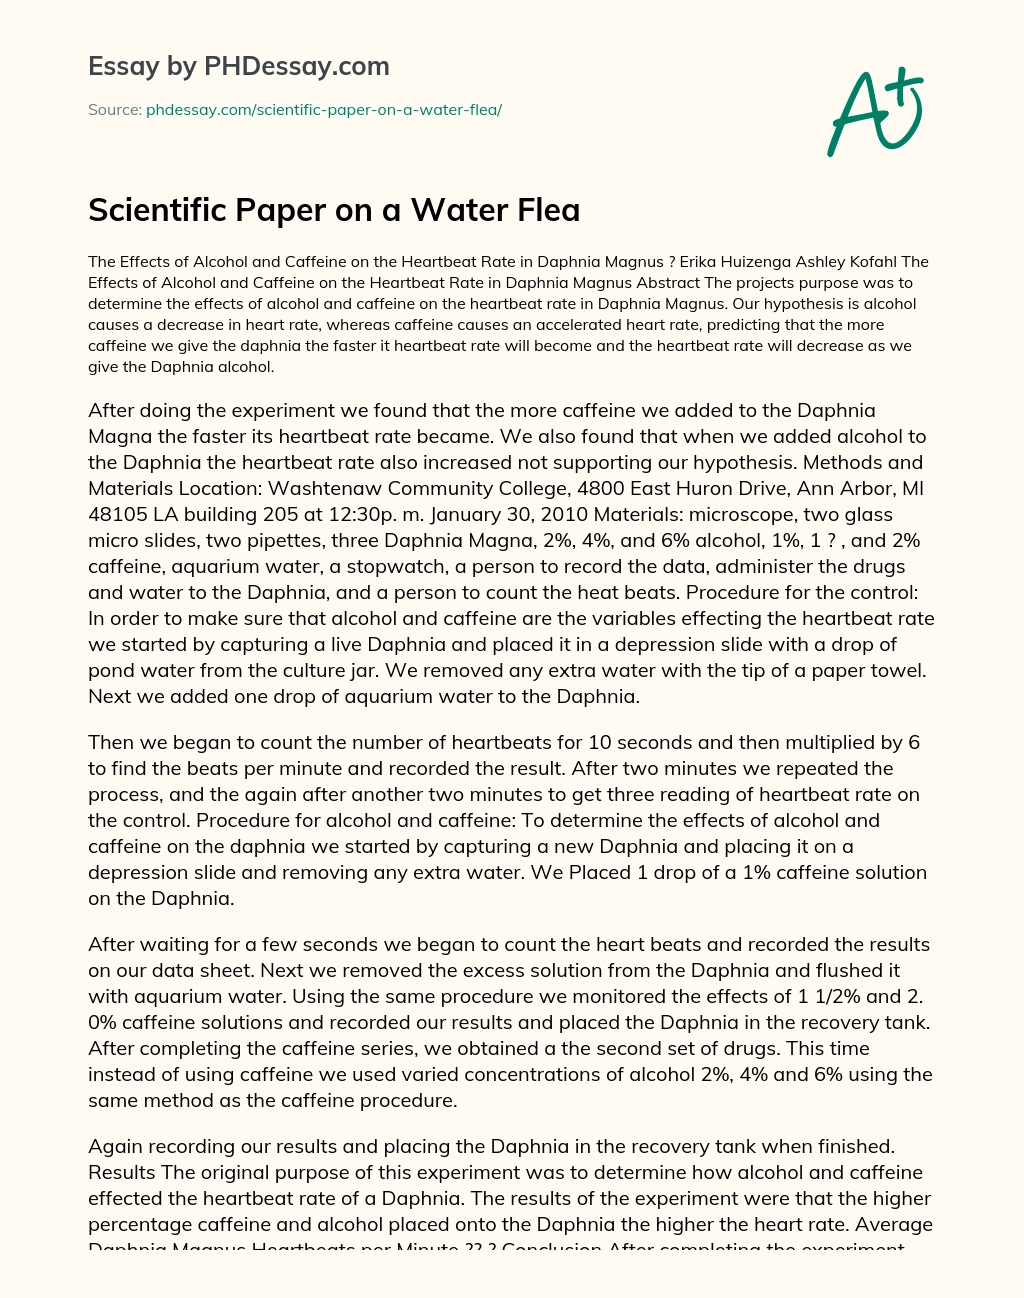 Scientific Paper on a Water Flea essay